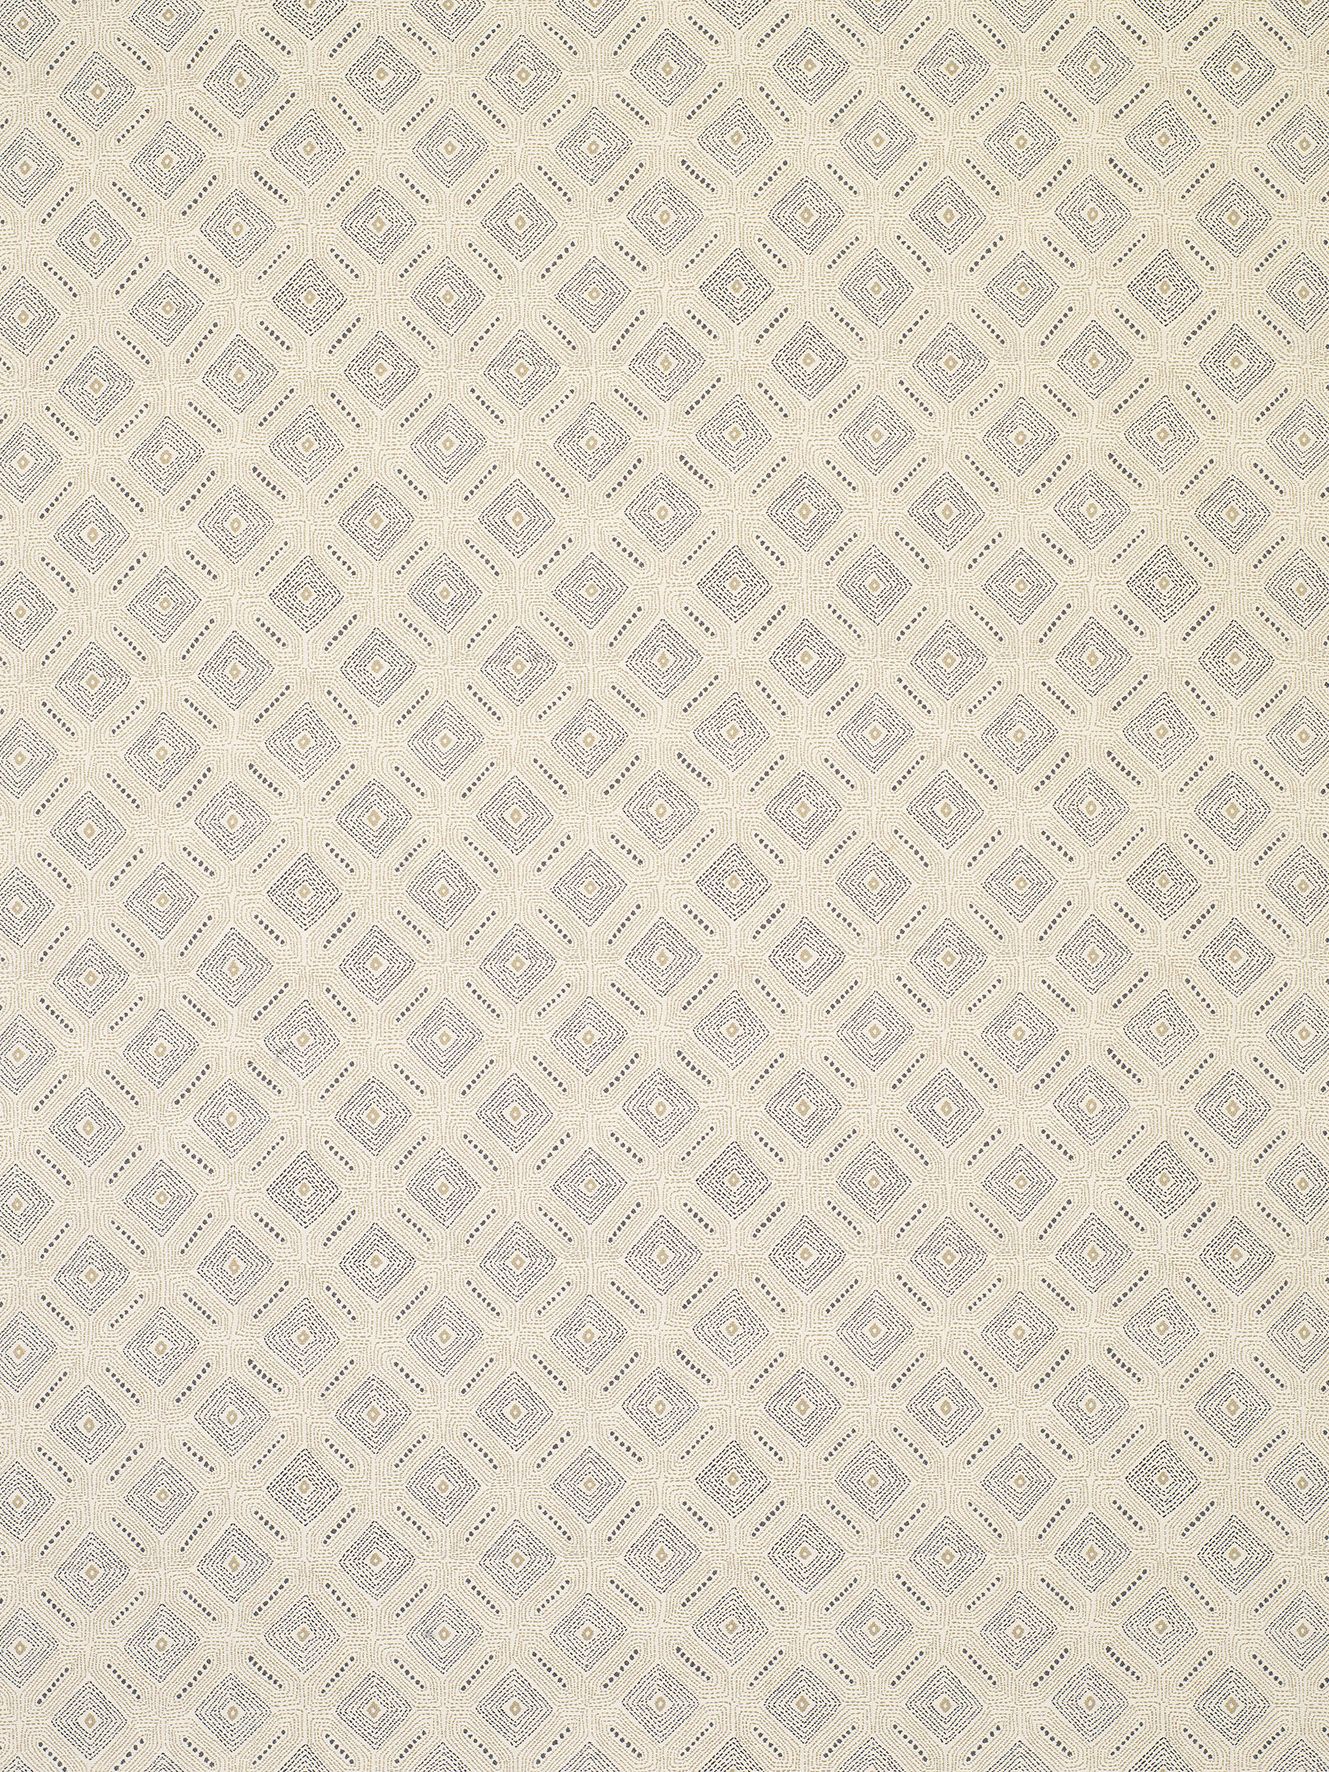 Nina Campbell Lorette Furnishing Fabric, Beige/Chocolate